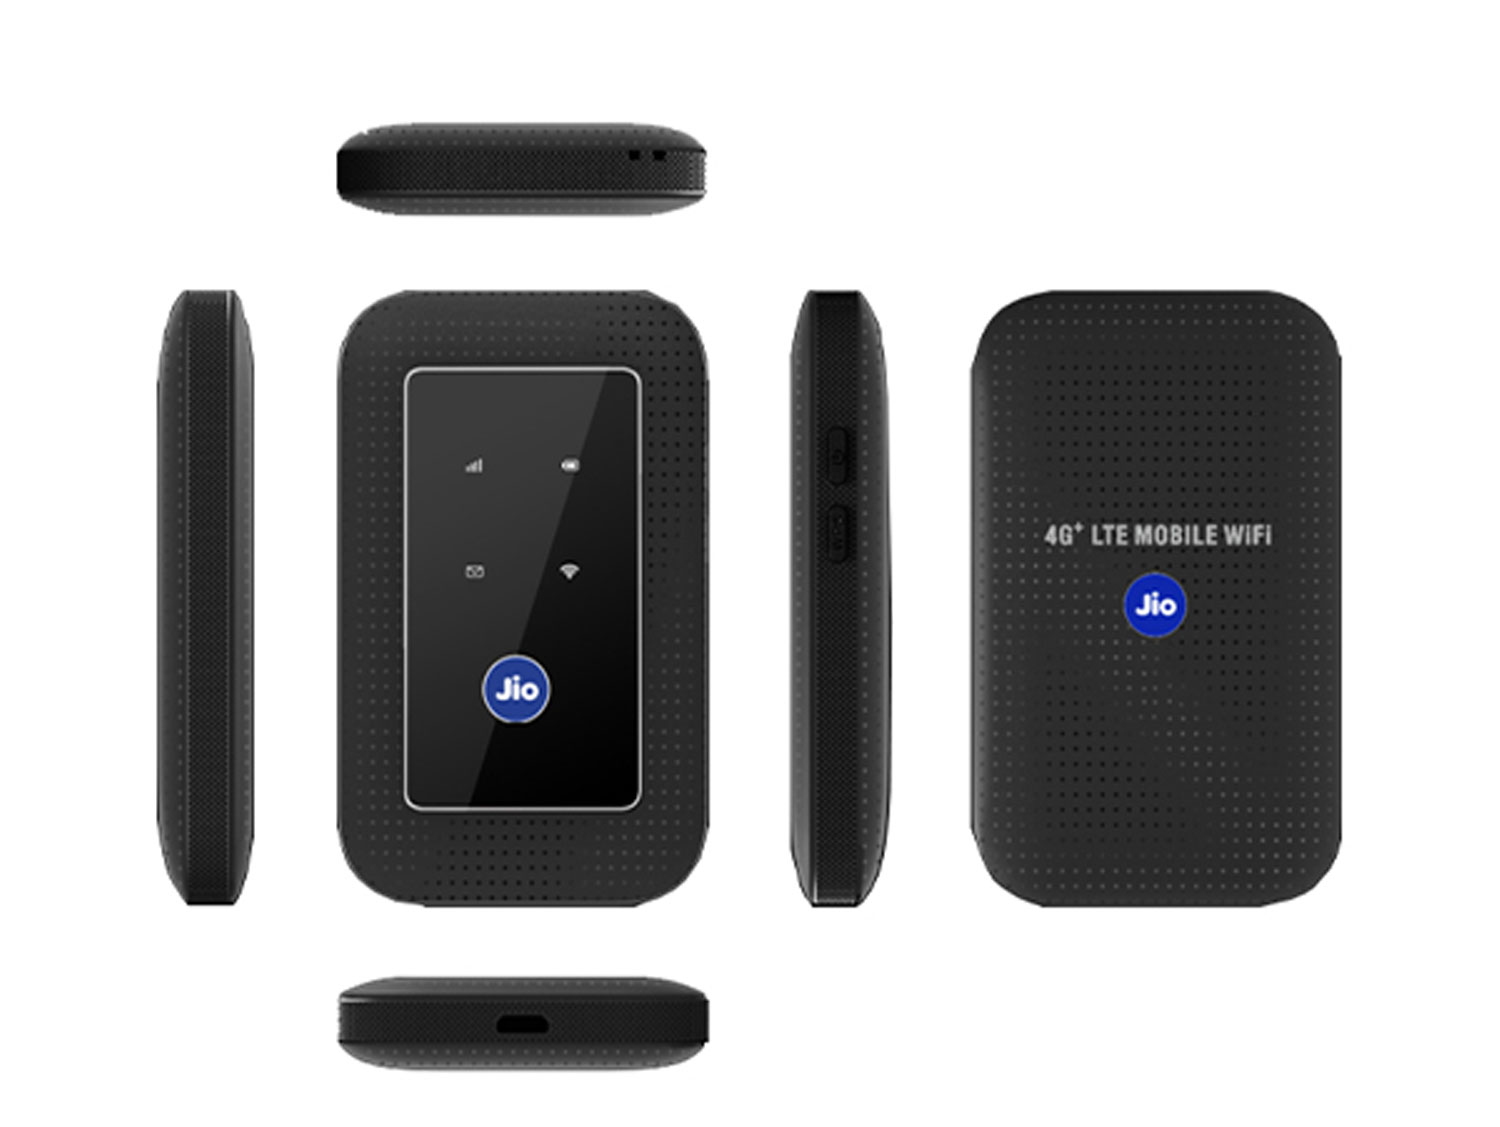 JIO 4G LTE Mobile WiFi Hotspot Portable Router - MF680s